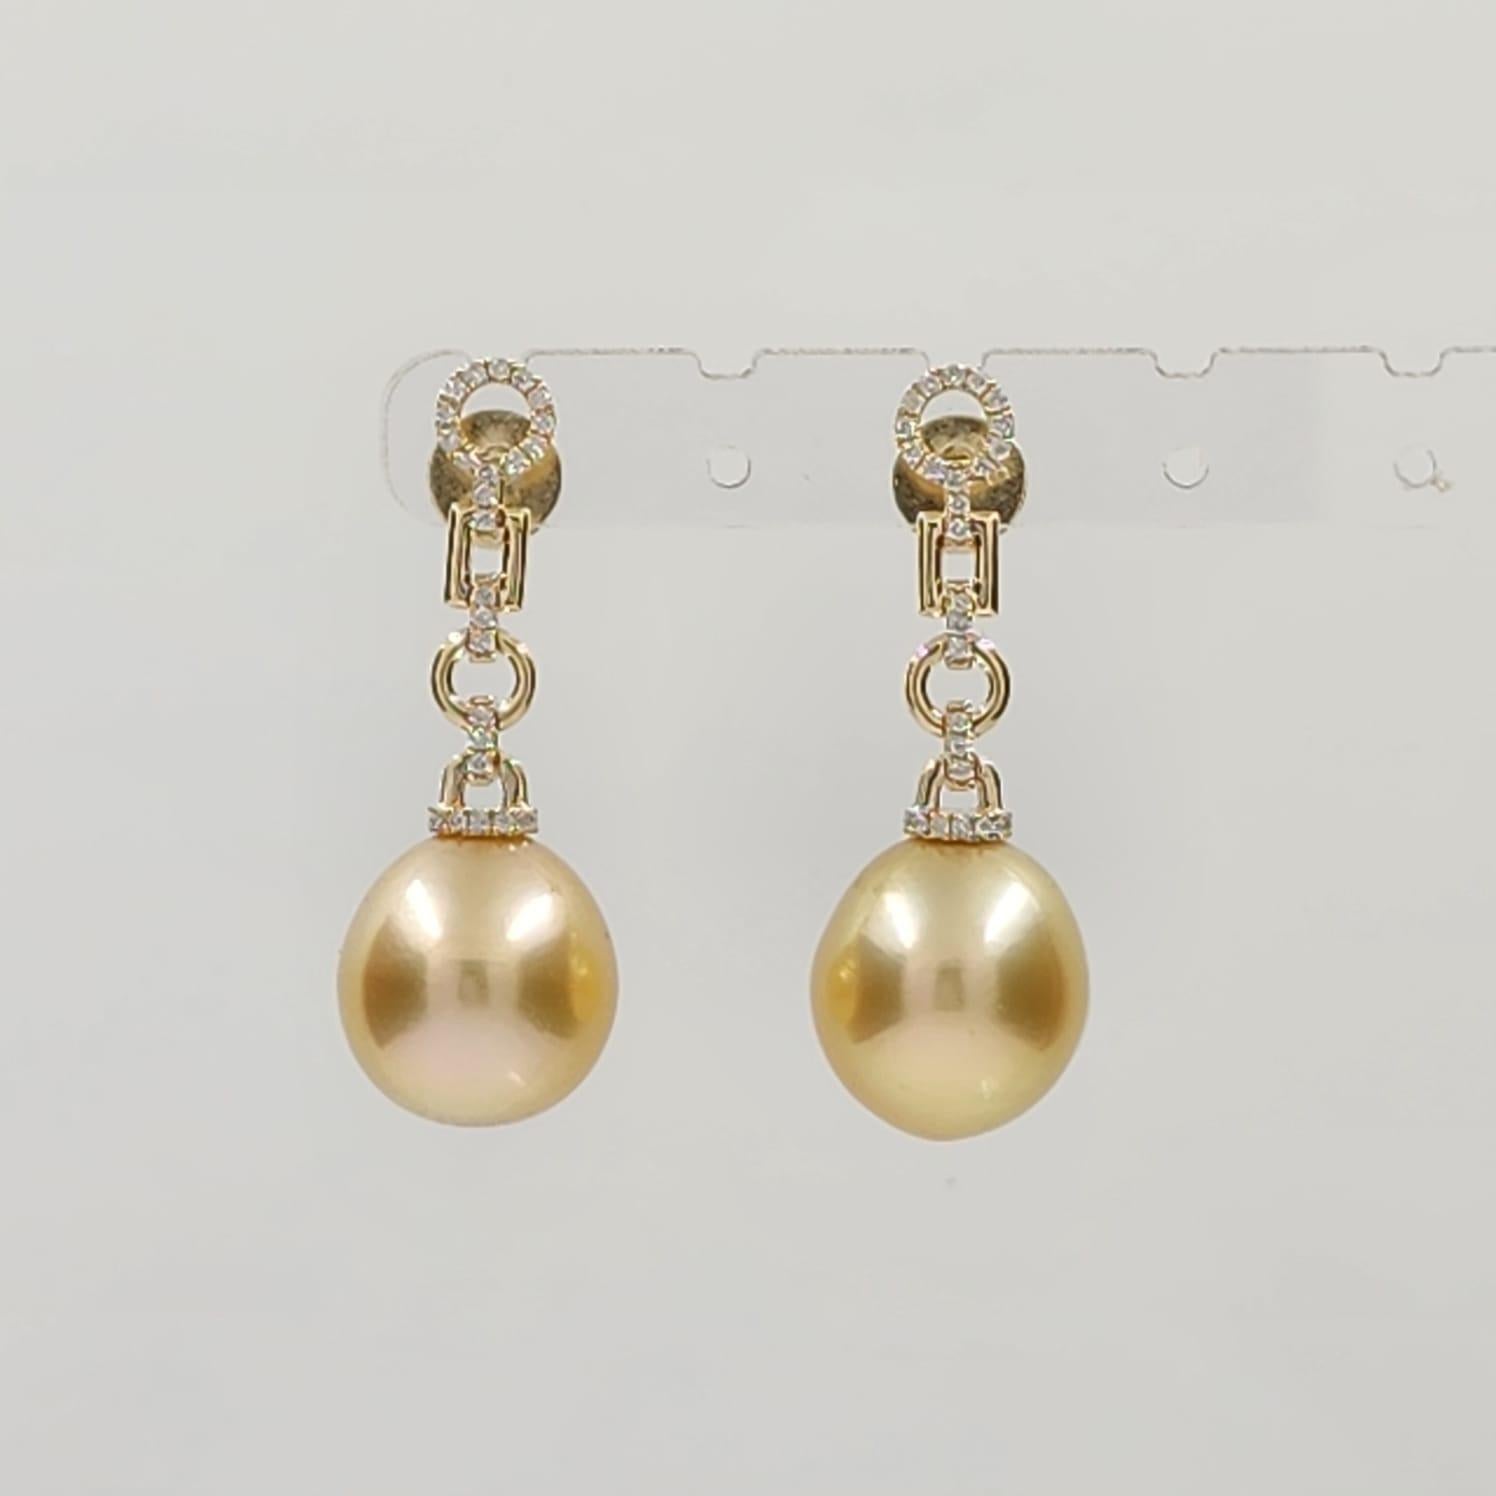 12.5 x 14mm Oval South Sea Pearl Diamond Dangle Earrings in 14 Karat Yellow Gold For Sale 2